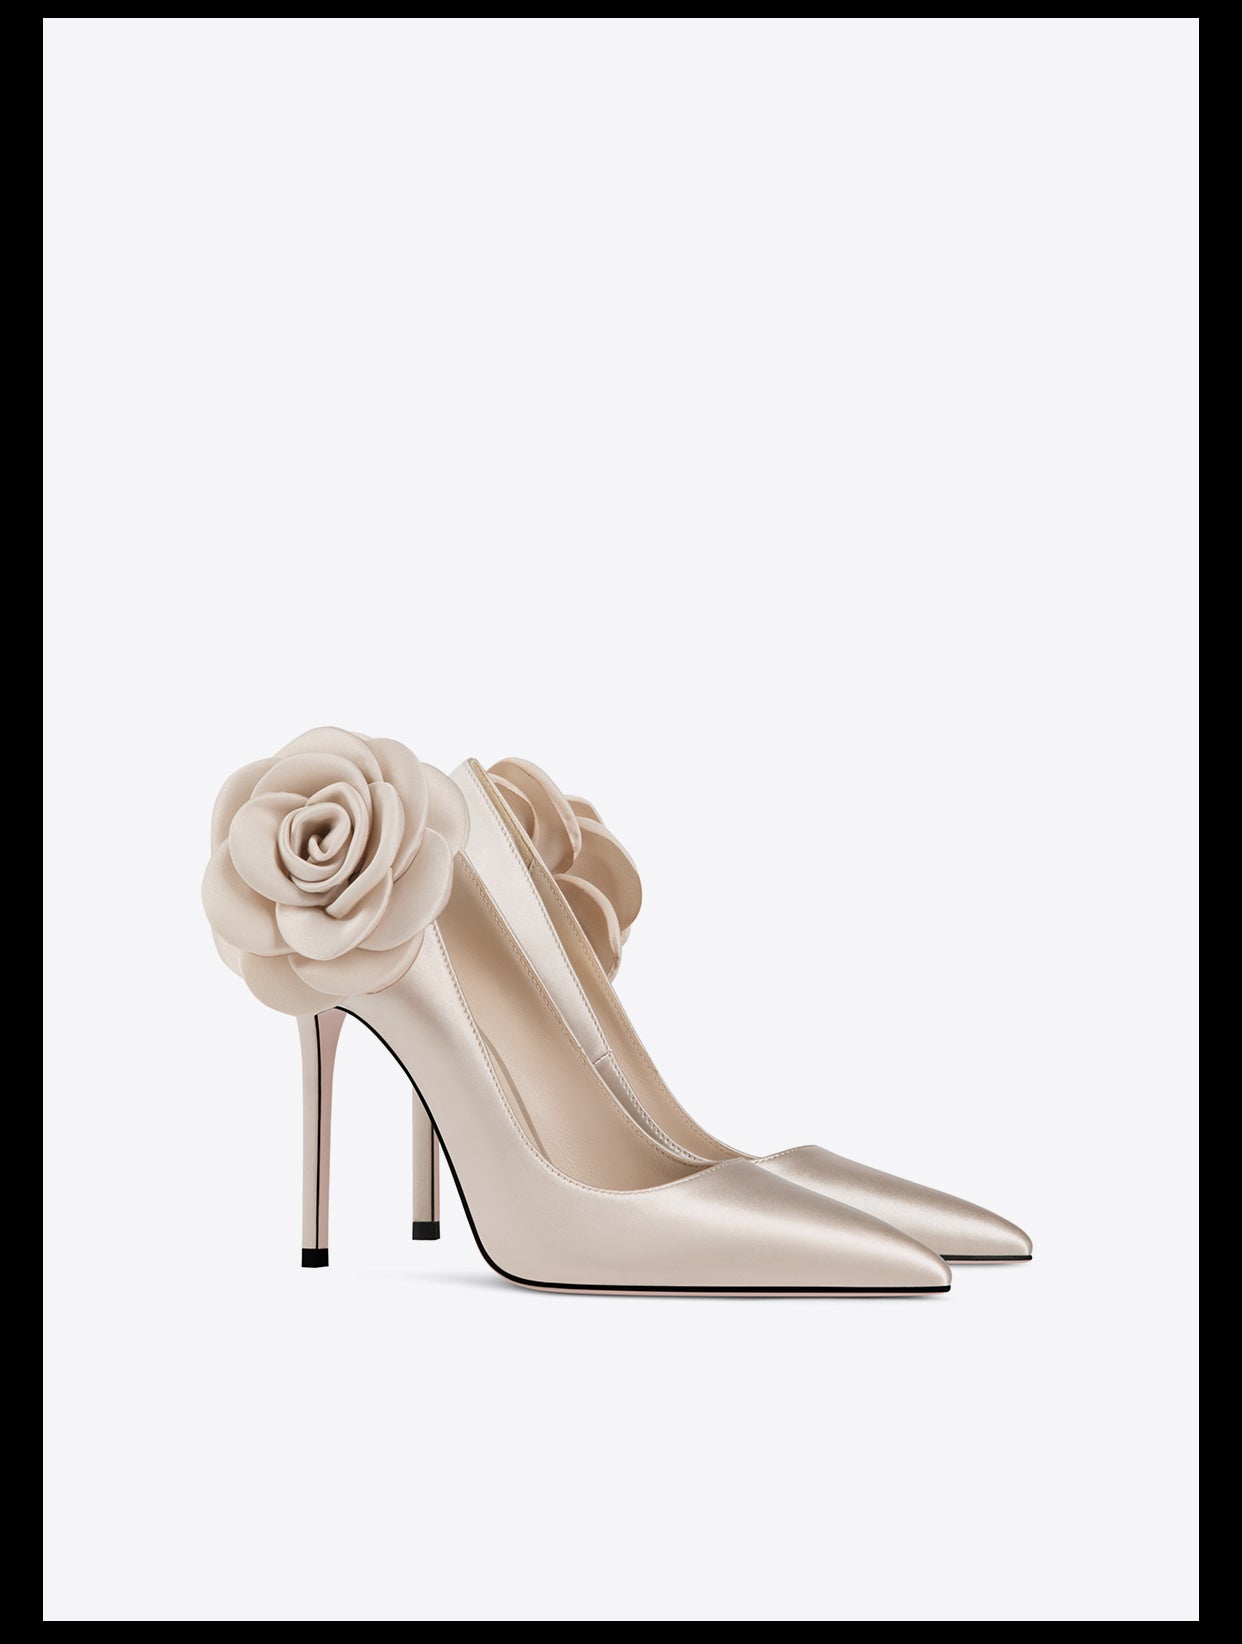 Fab Fei autumn flower high heels pointed toe banquet stiletto women's shoes- Lori